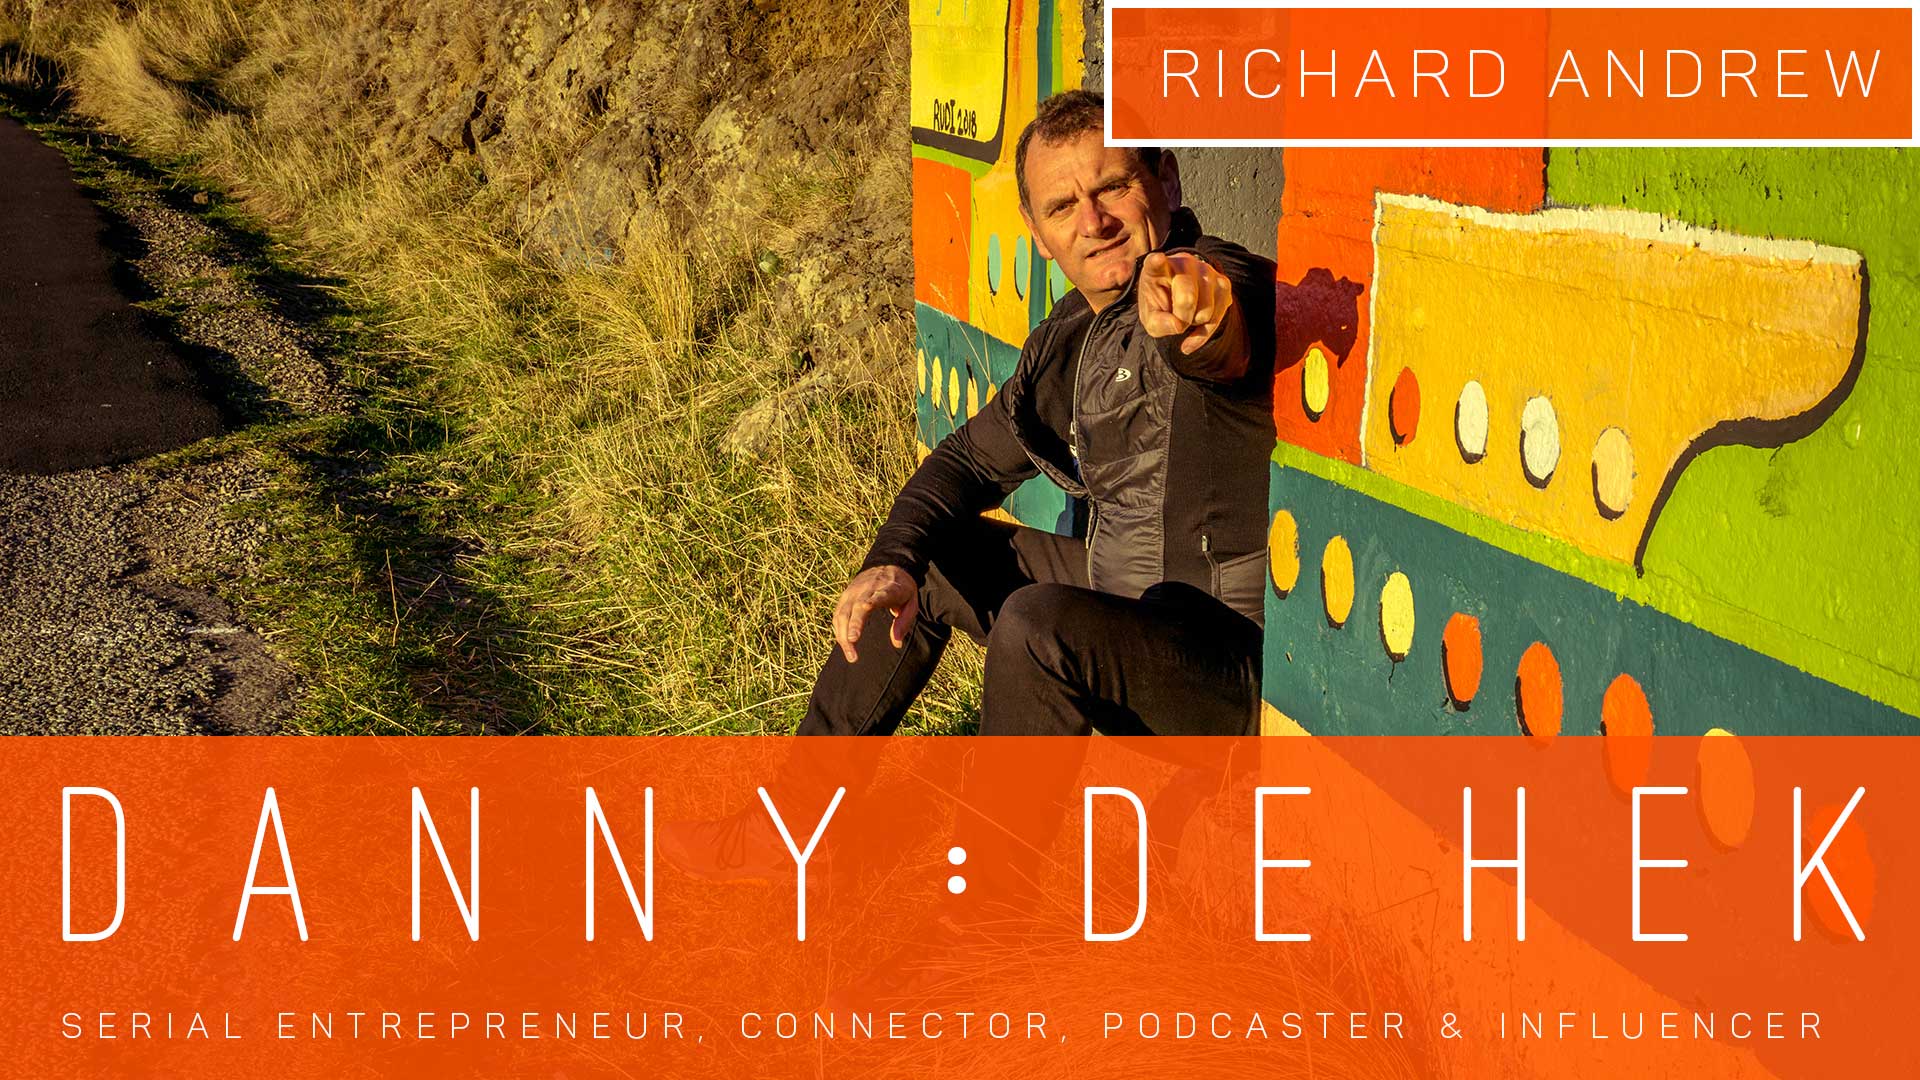 Learn Implement Share Richard Andrew Entrepreneur Decision Maker Connector Podcaster Educator